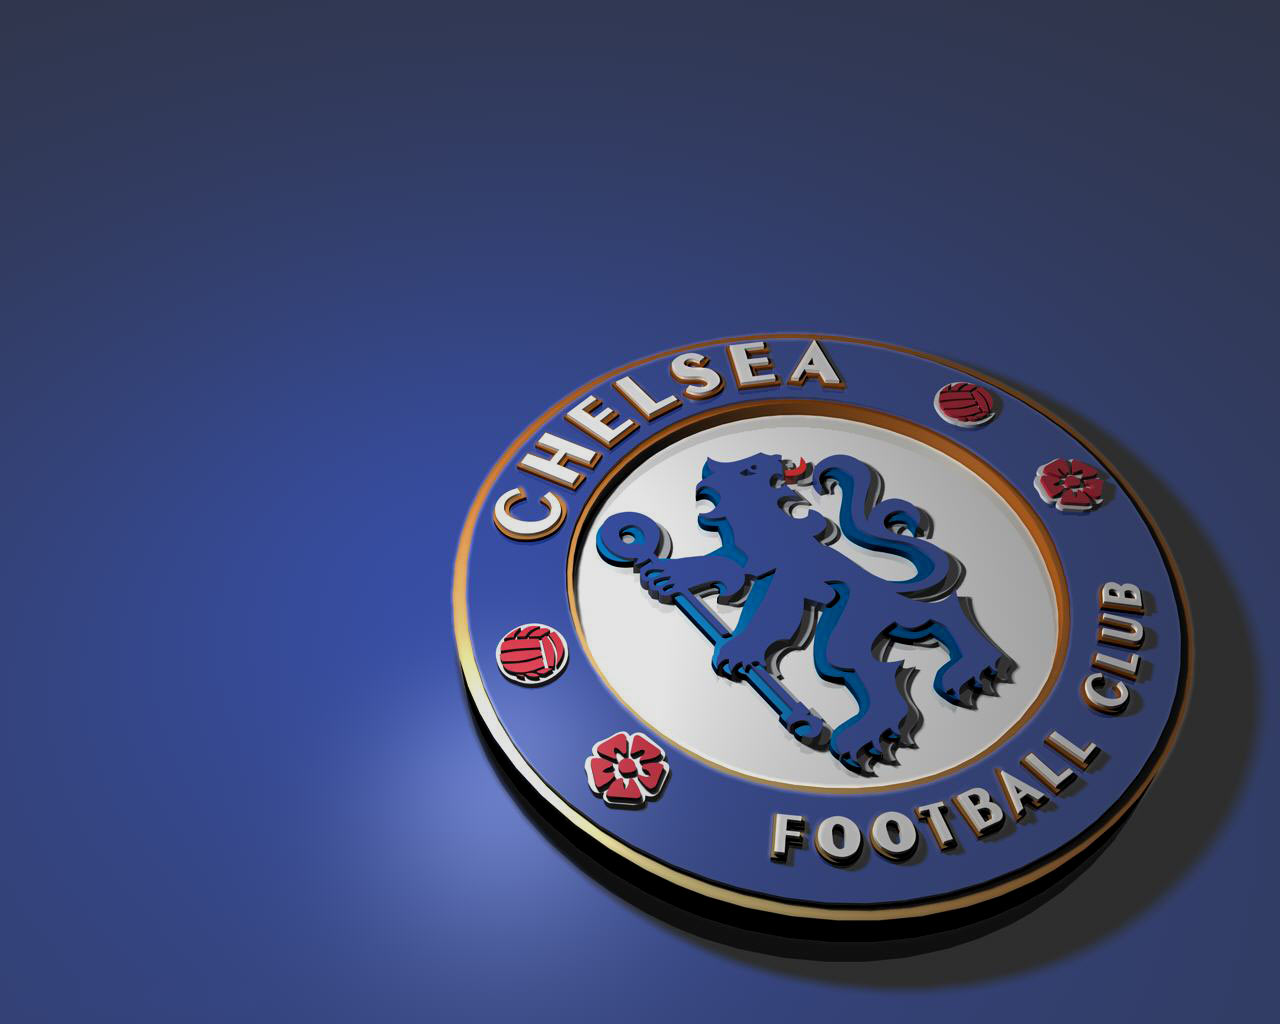 Chelsea FC Wallpaper 2